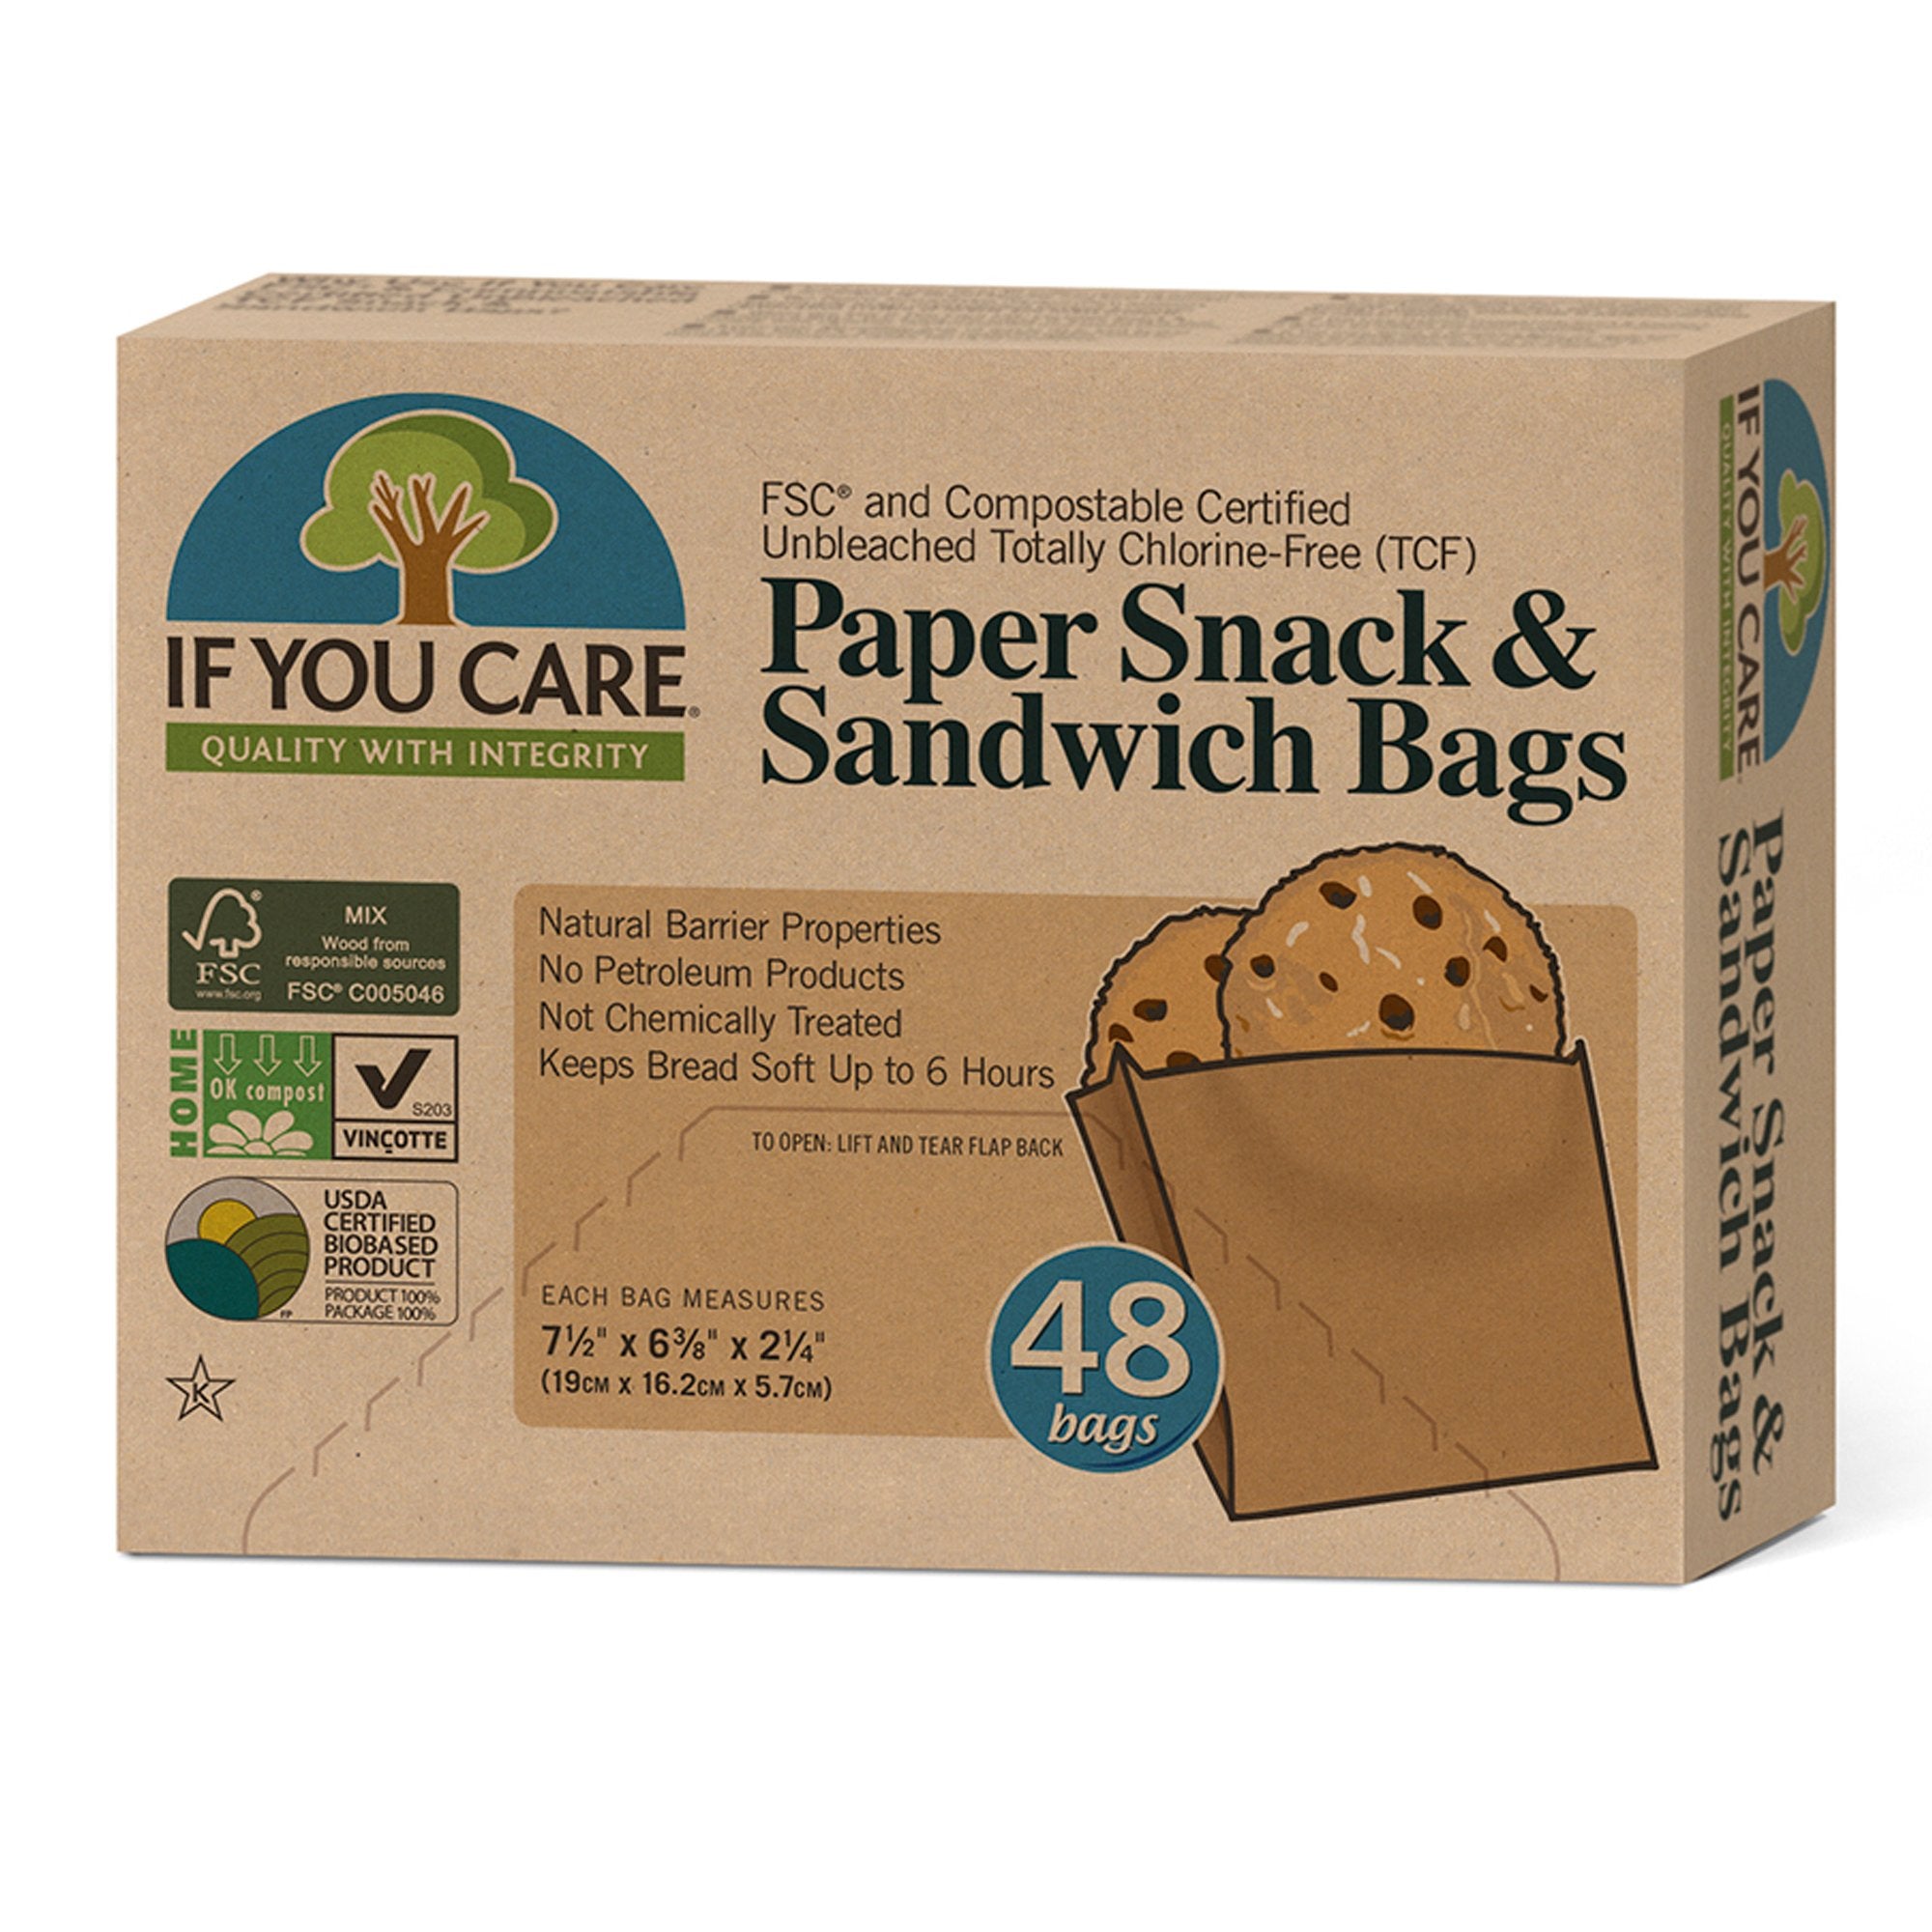 paper snack & sandwich bags in package, 48 bags. bag measure 19cm x 6.2cm x 5.7cm